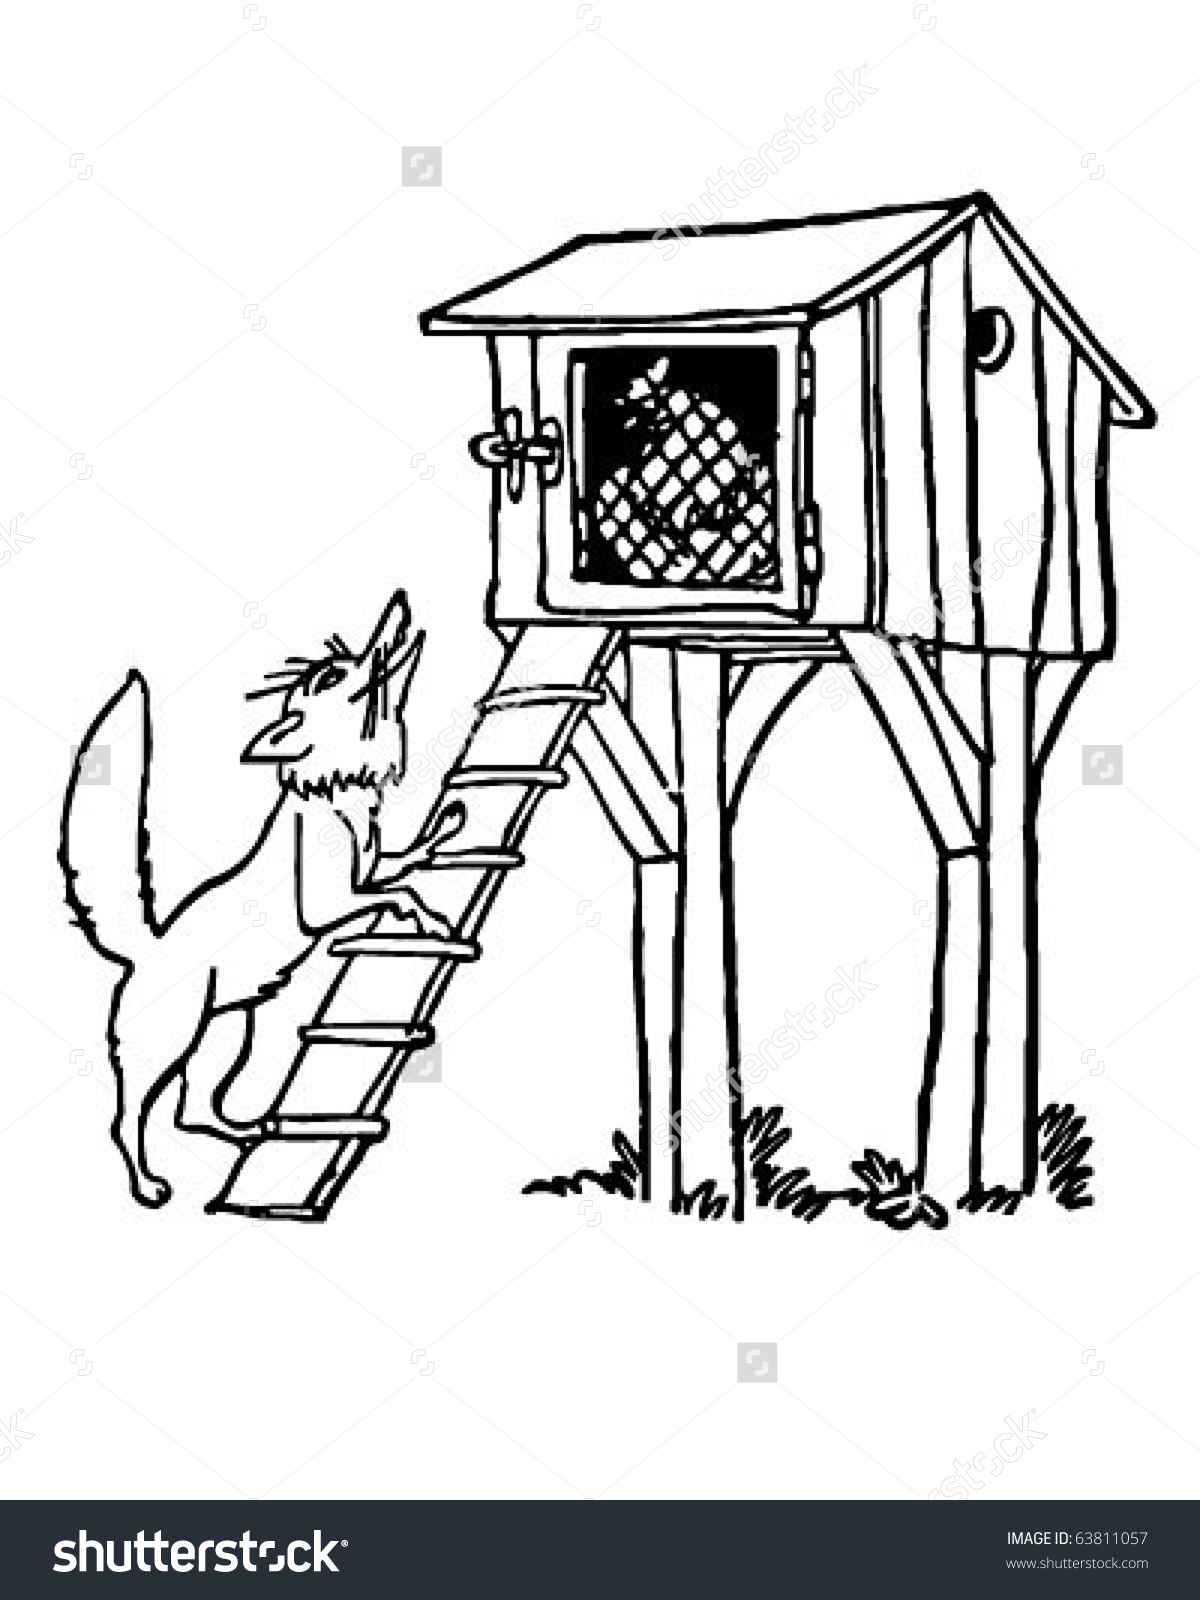 Fox Chicken Coop Retro Clipart Illustration Stock Vector 63811057.